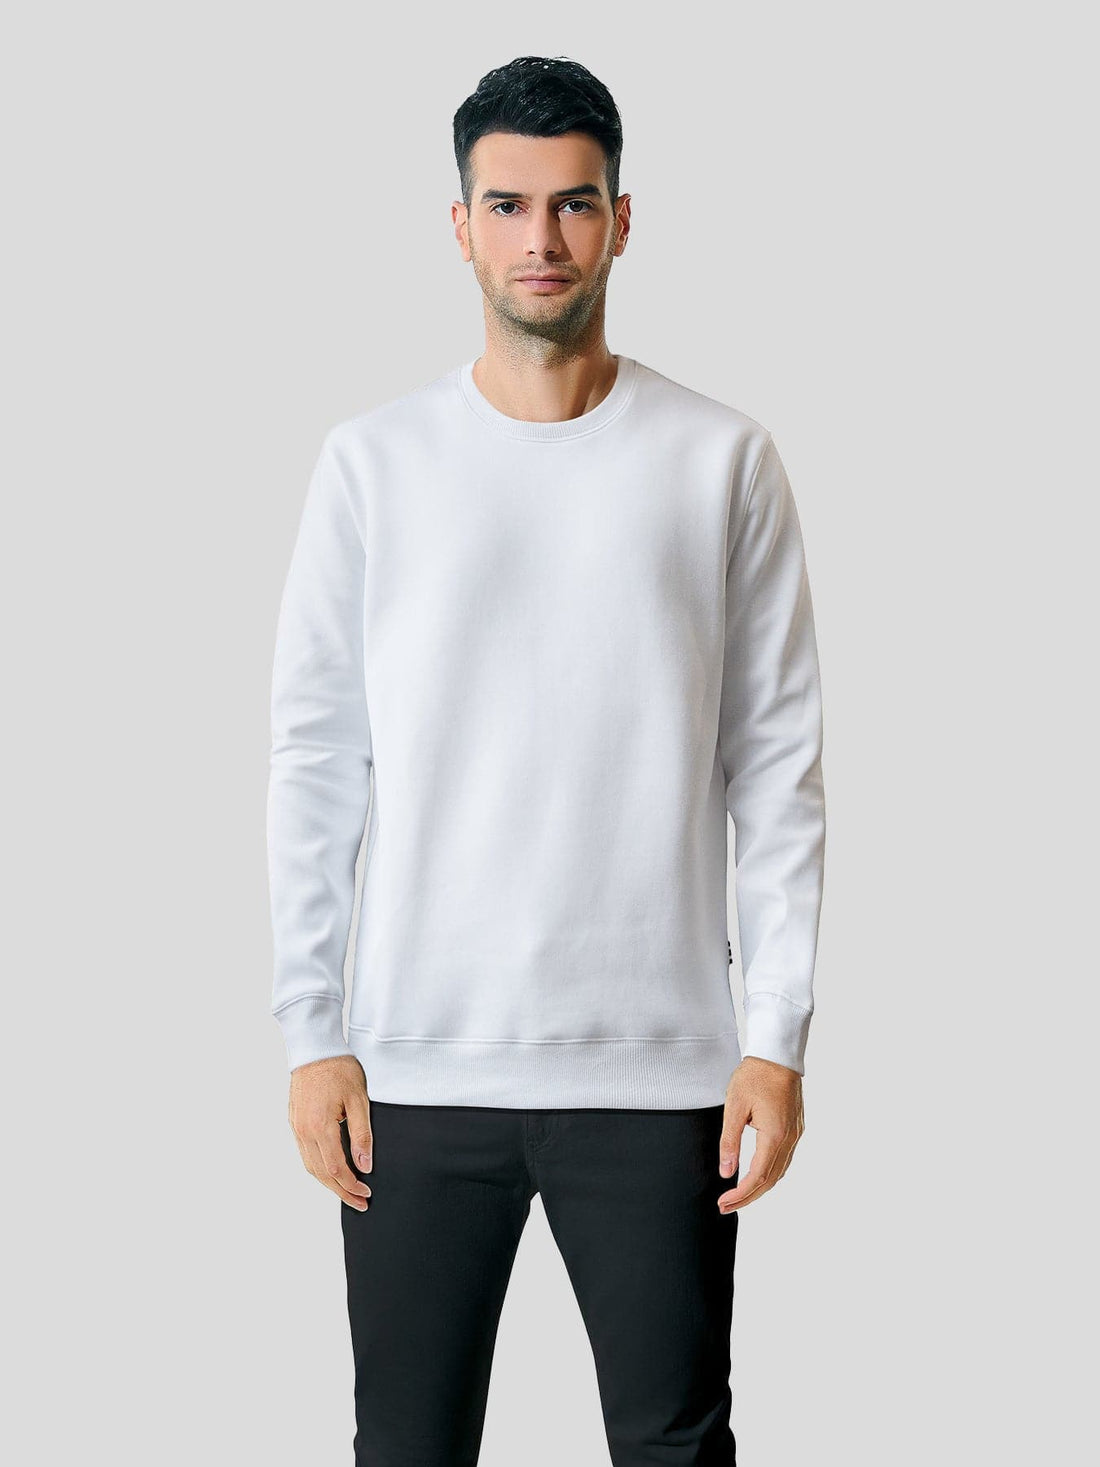 Basic White Pullover Sweatshirt